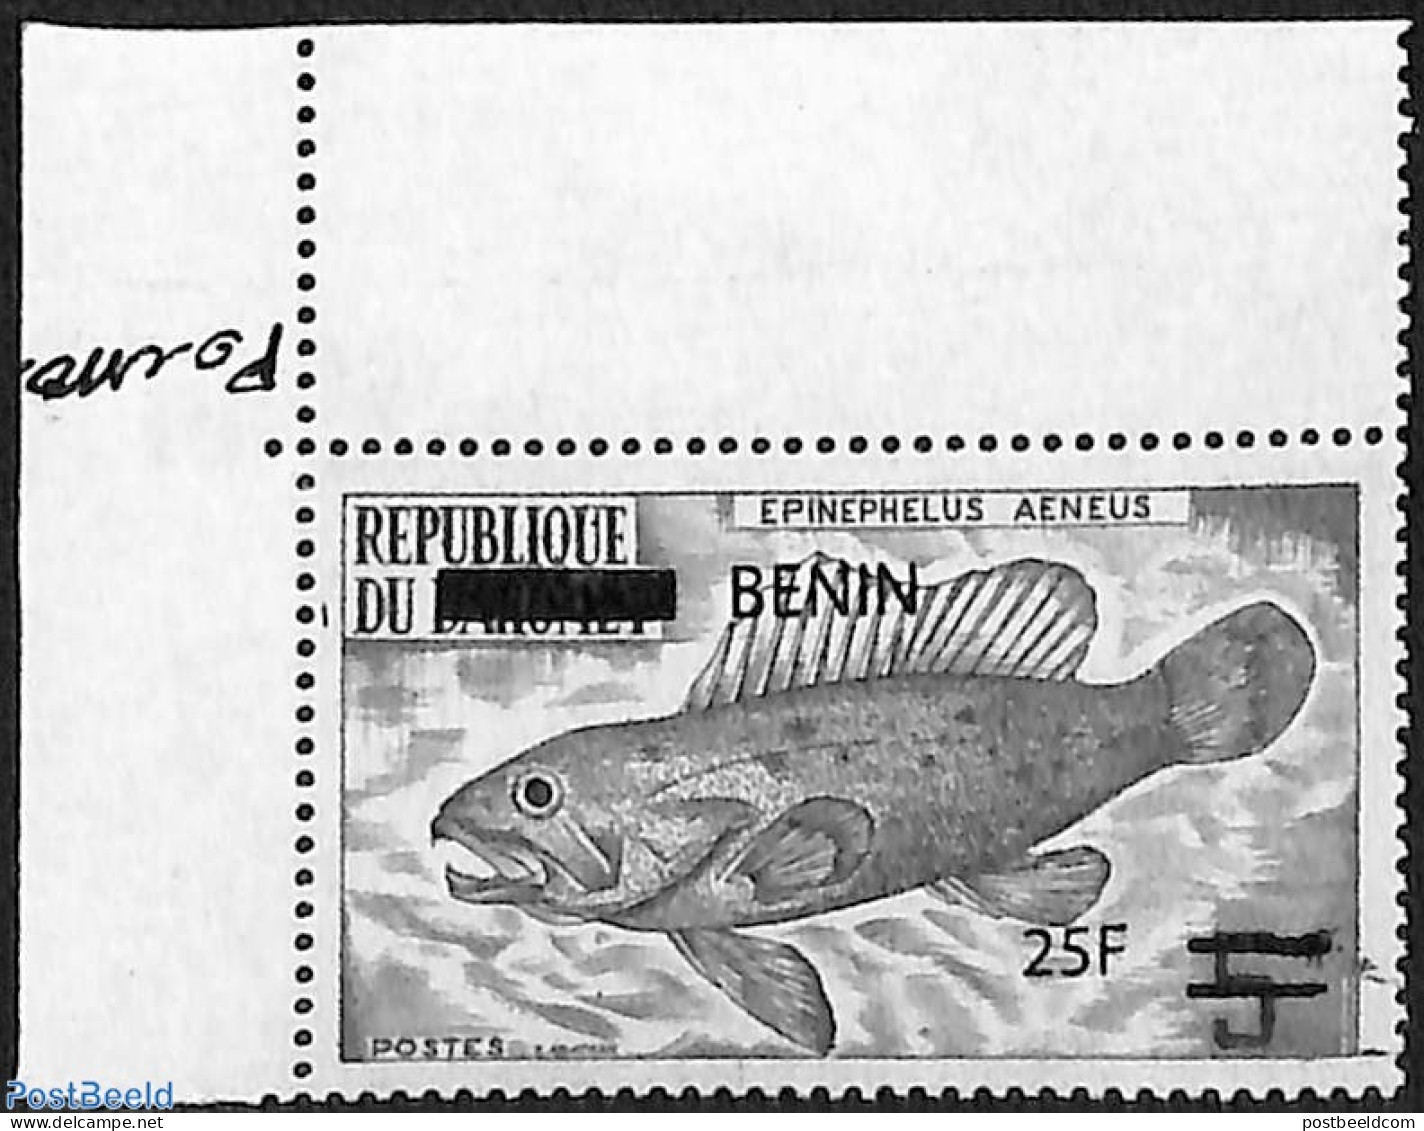 Benin 2007 Epinephelus Aeneus, Fish, Rare, Overprint, Mint NH, Nature - Various - Fish - Errors, Misprints, Plate Flaws - Ongebruikt